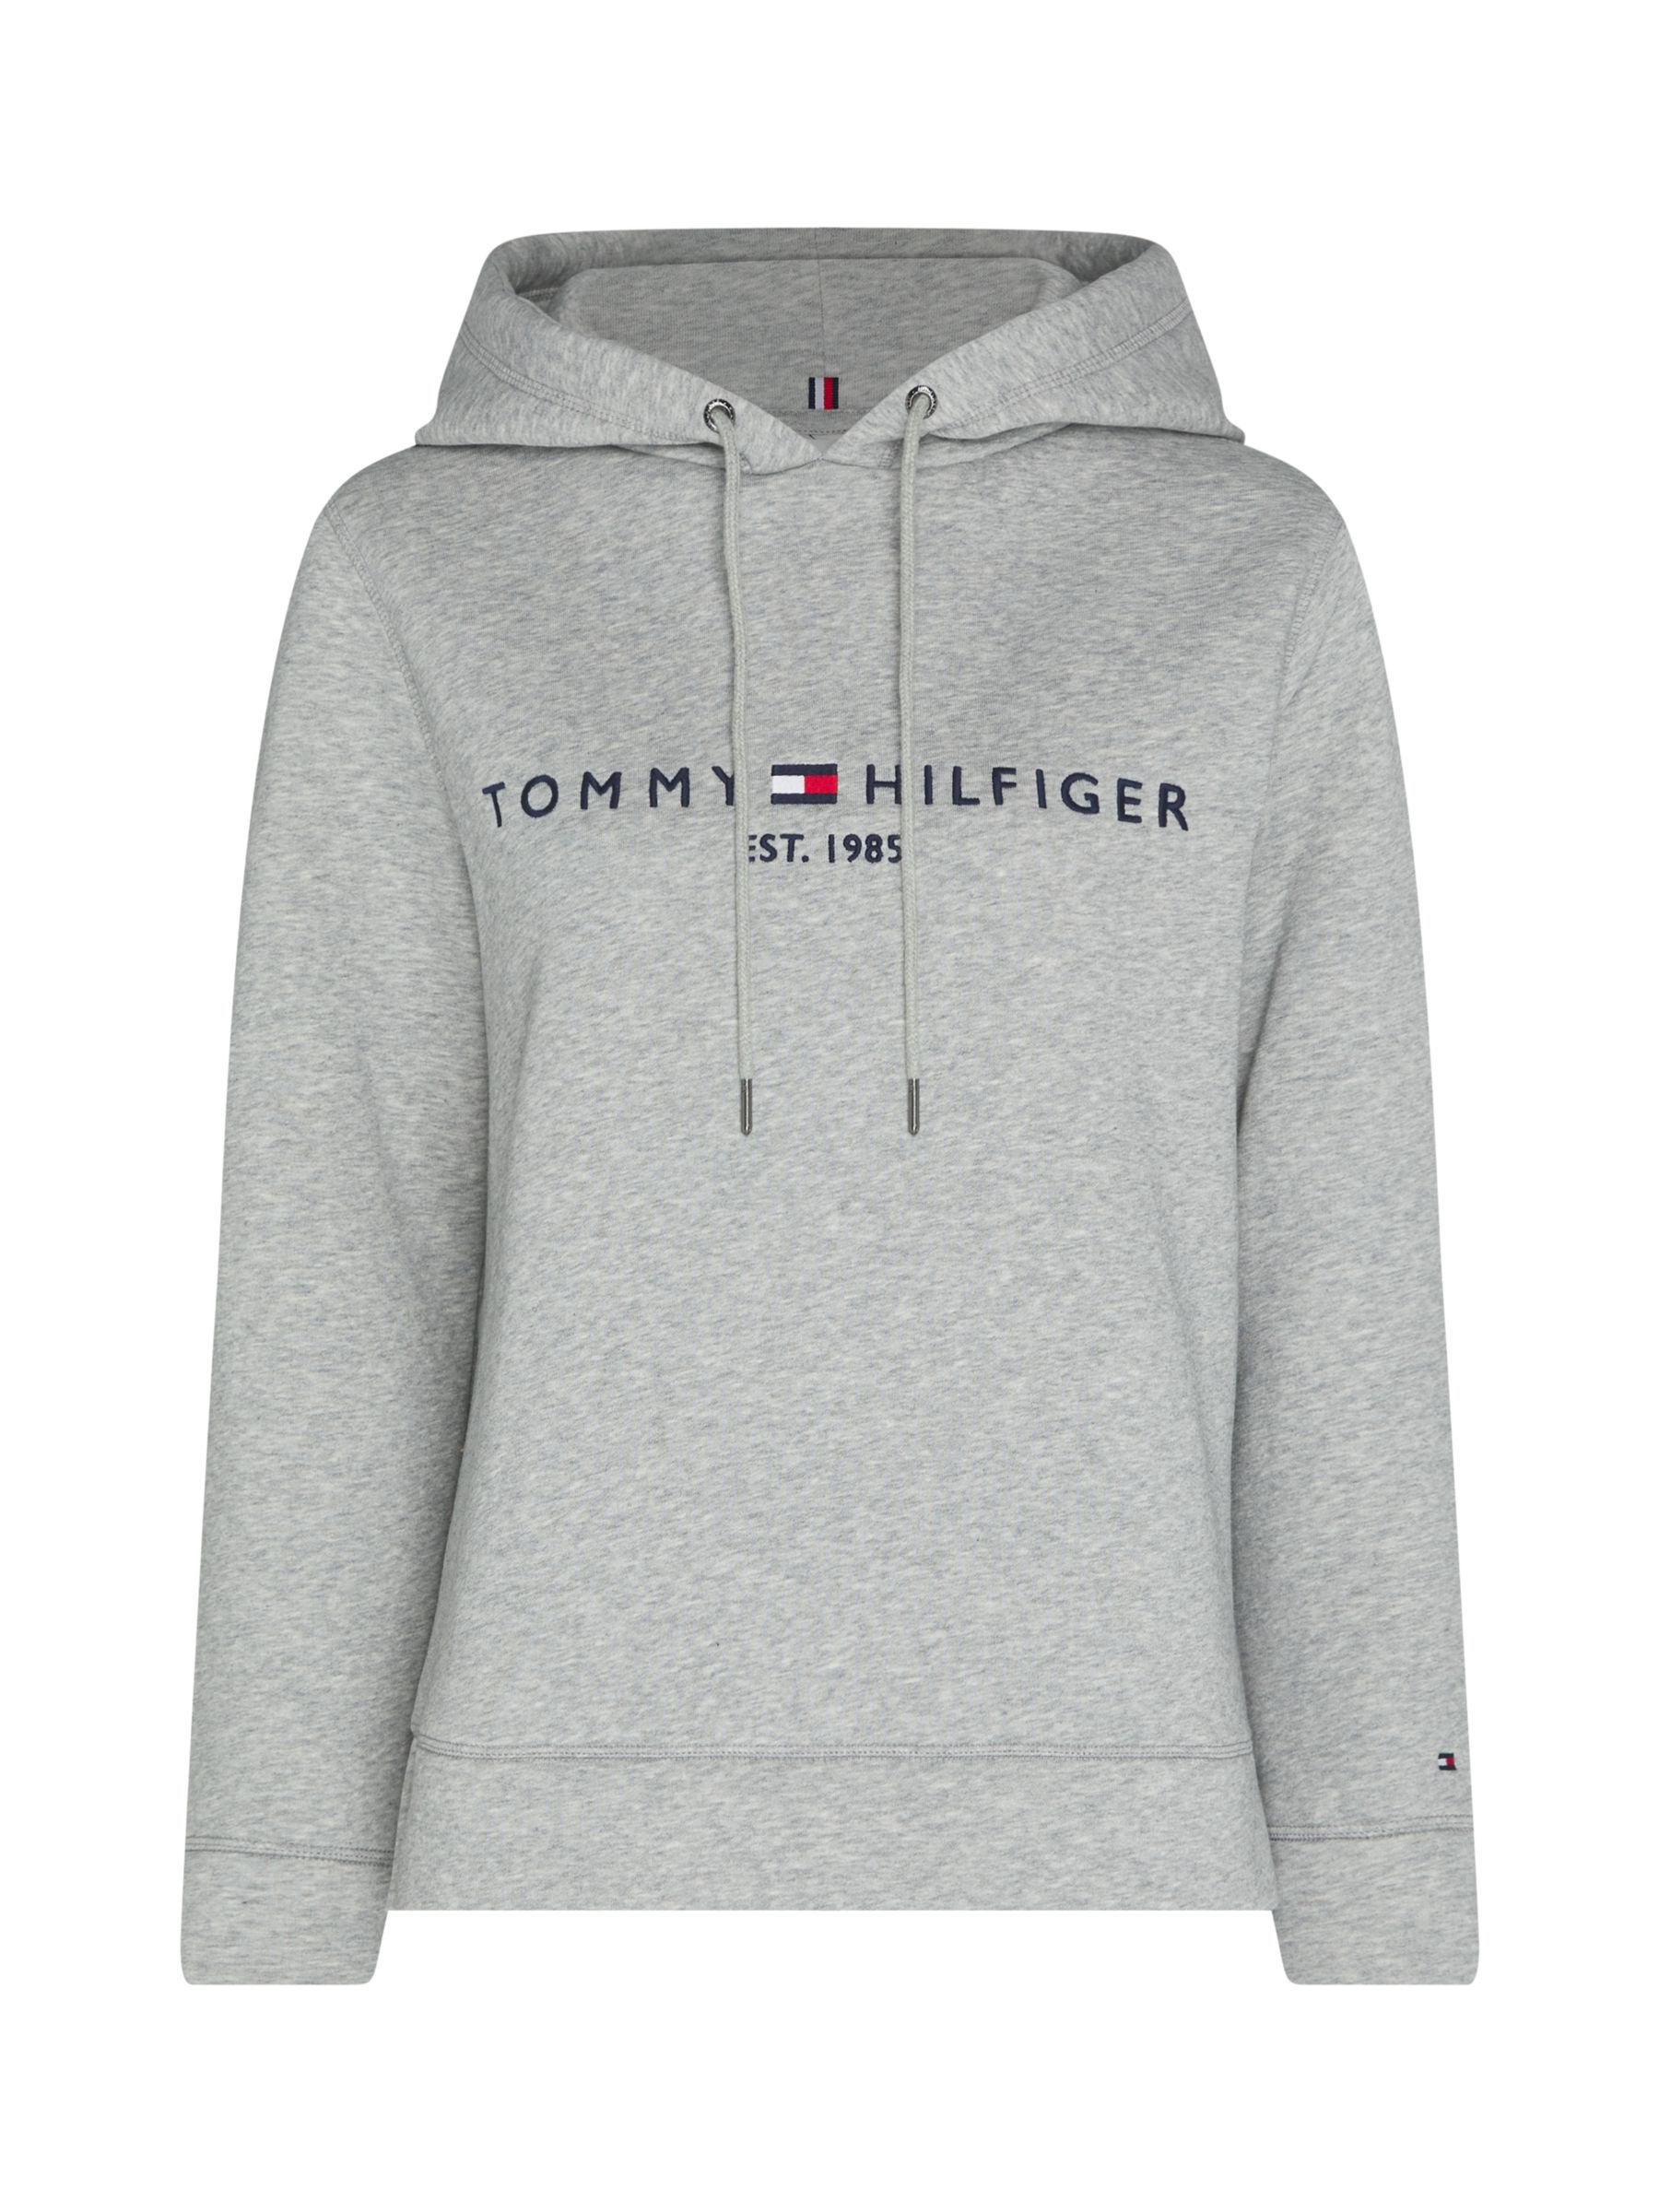 Tommy Hilfiger Heritage Logo Hoodie, Light Grey at John Lewis & Partners